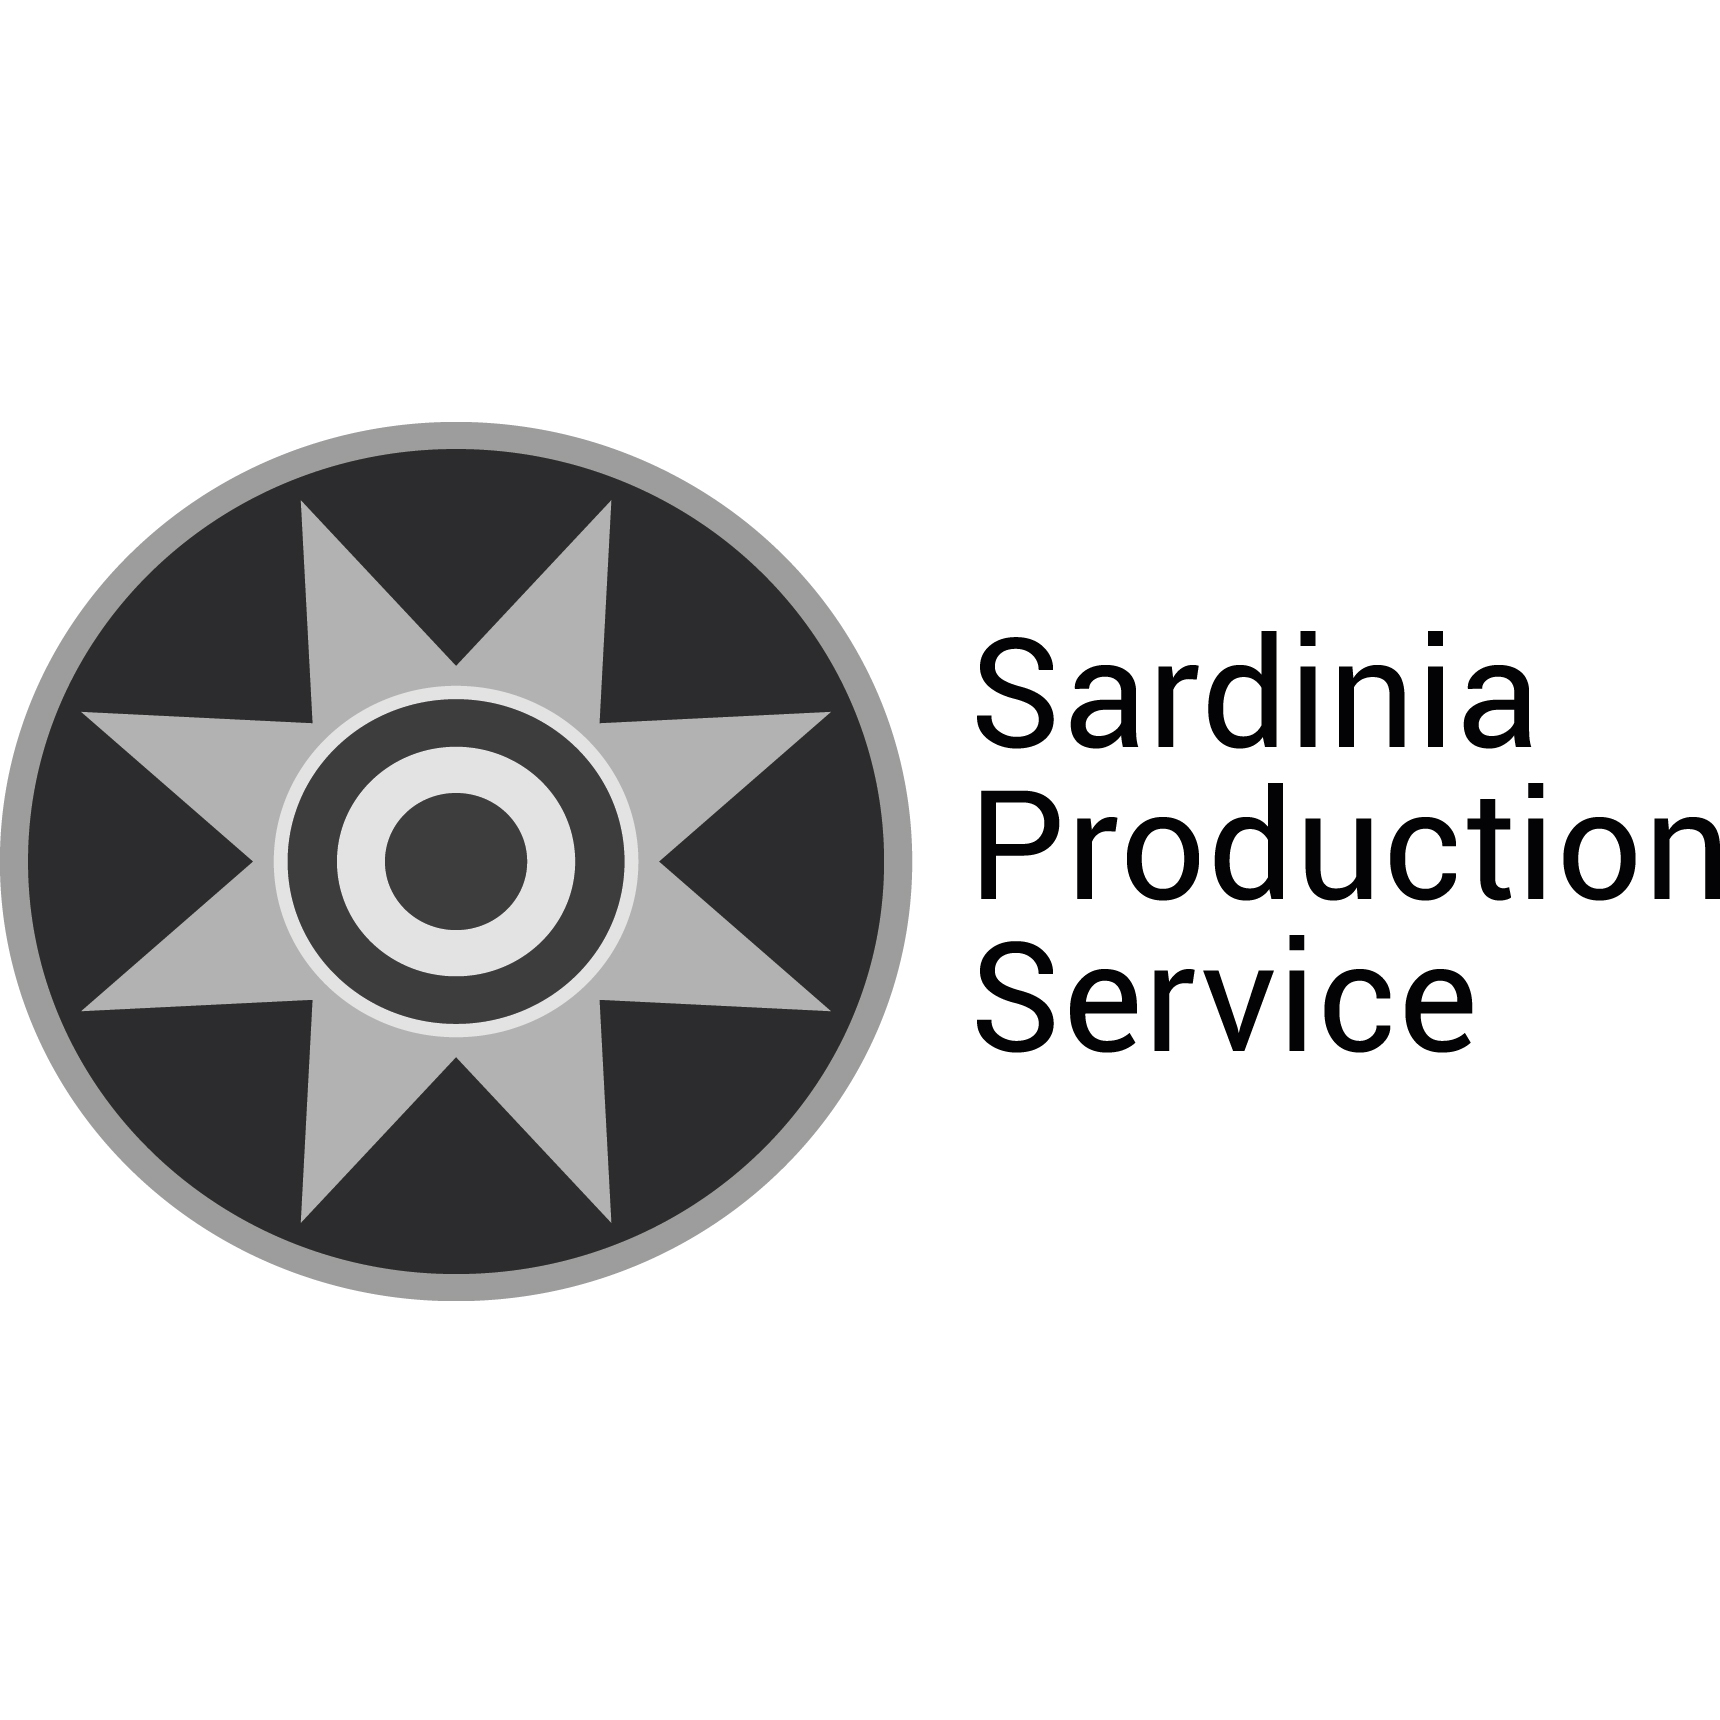 Sardinia Production Service